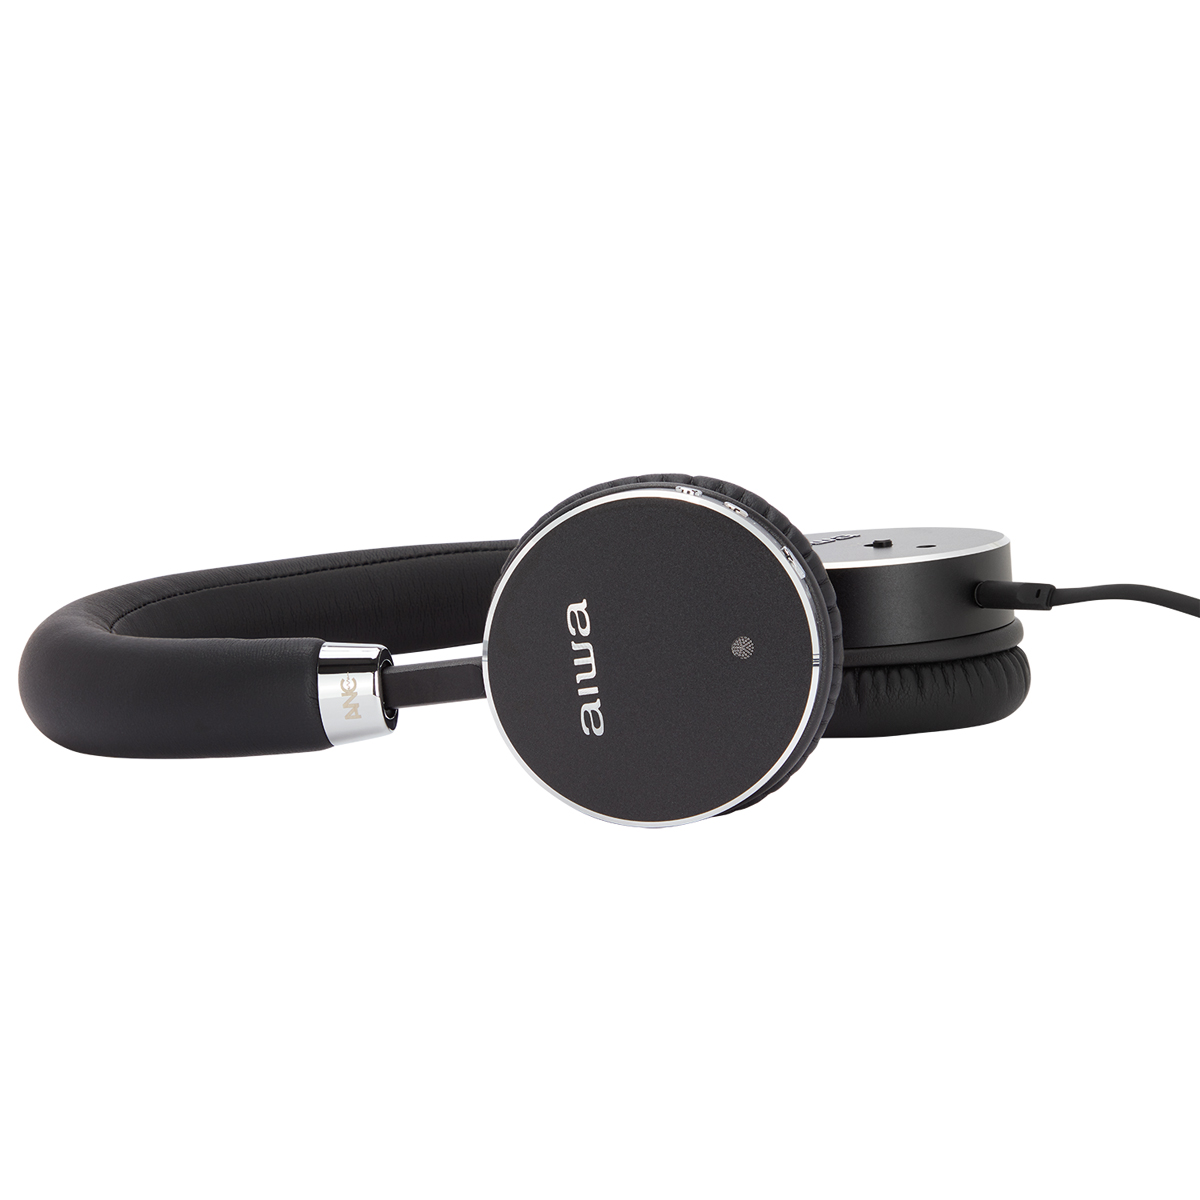 ANC AIWA HSTBTN-800BK, Kopfhörer On-ear Schwarz Bluetooth